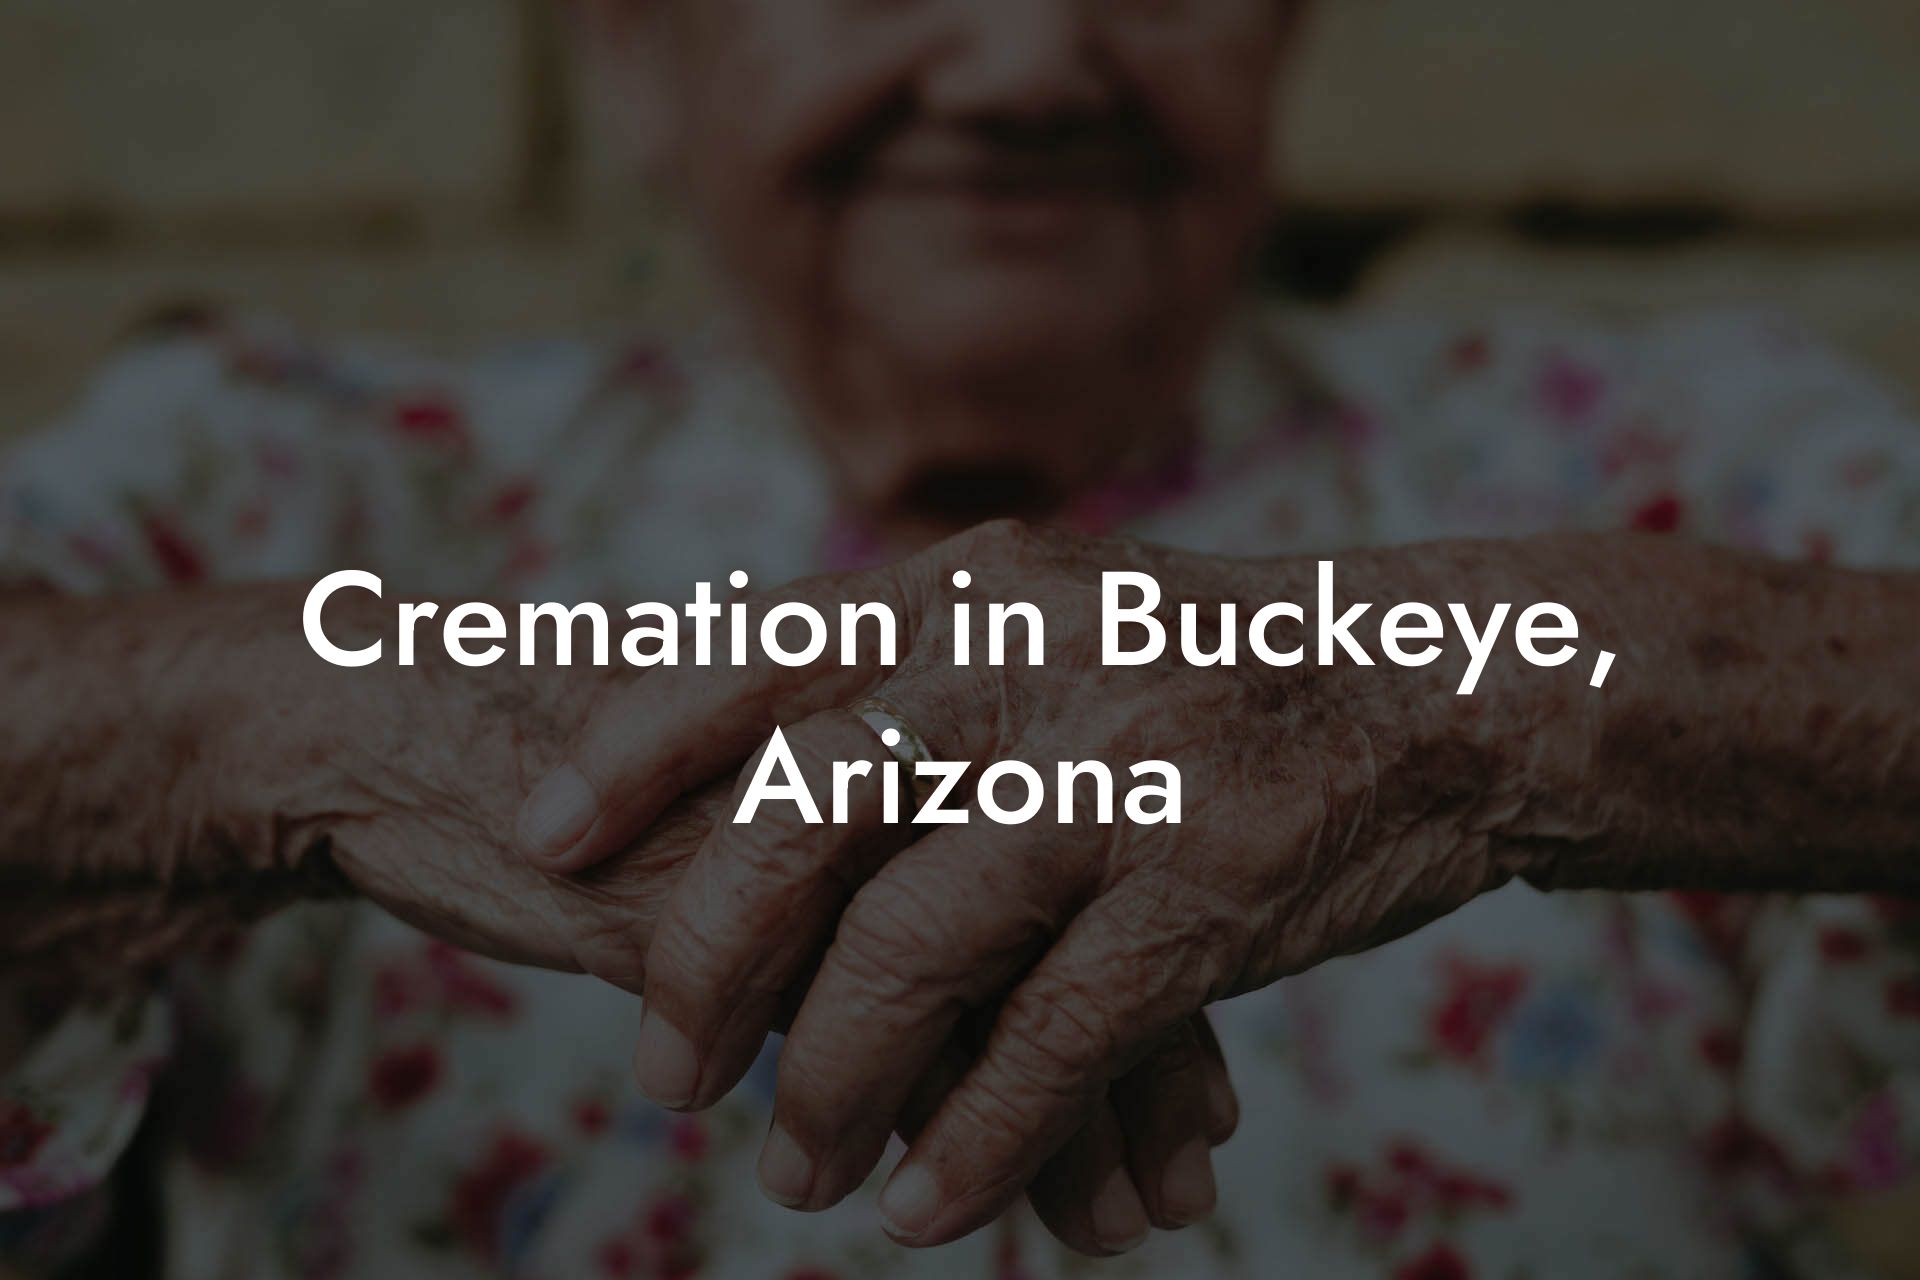 Cremation in Buckeye, Arizona